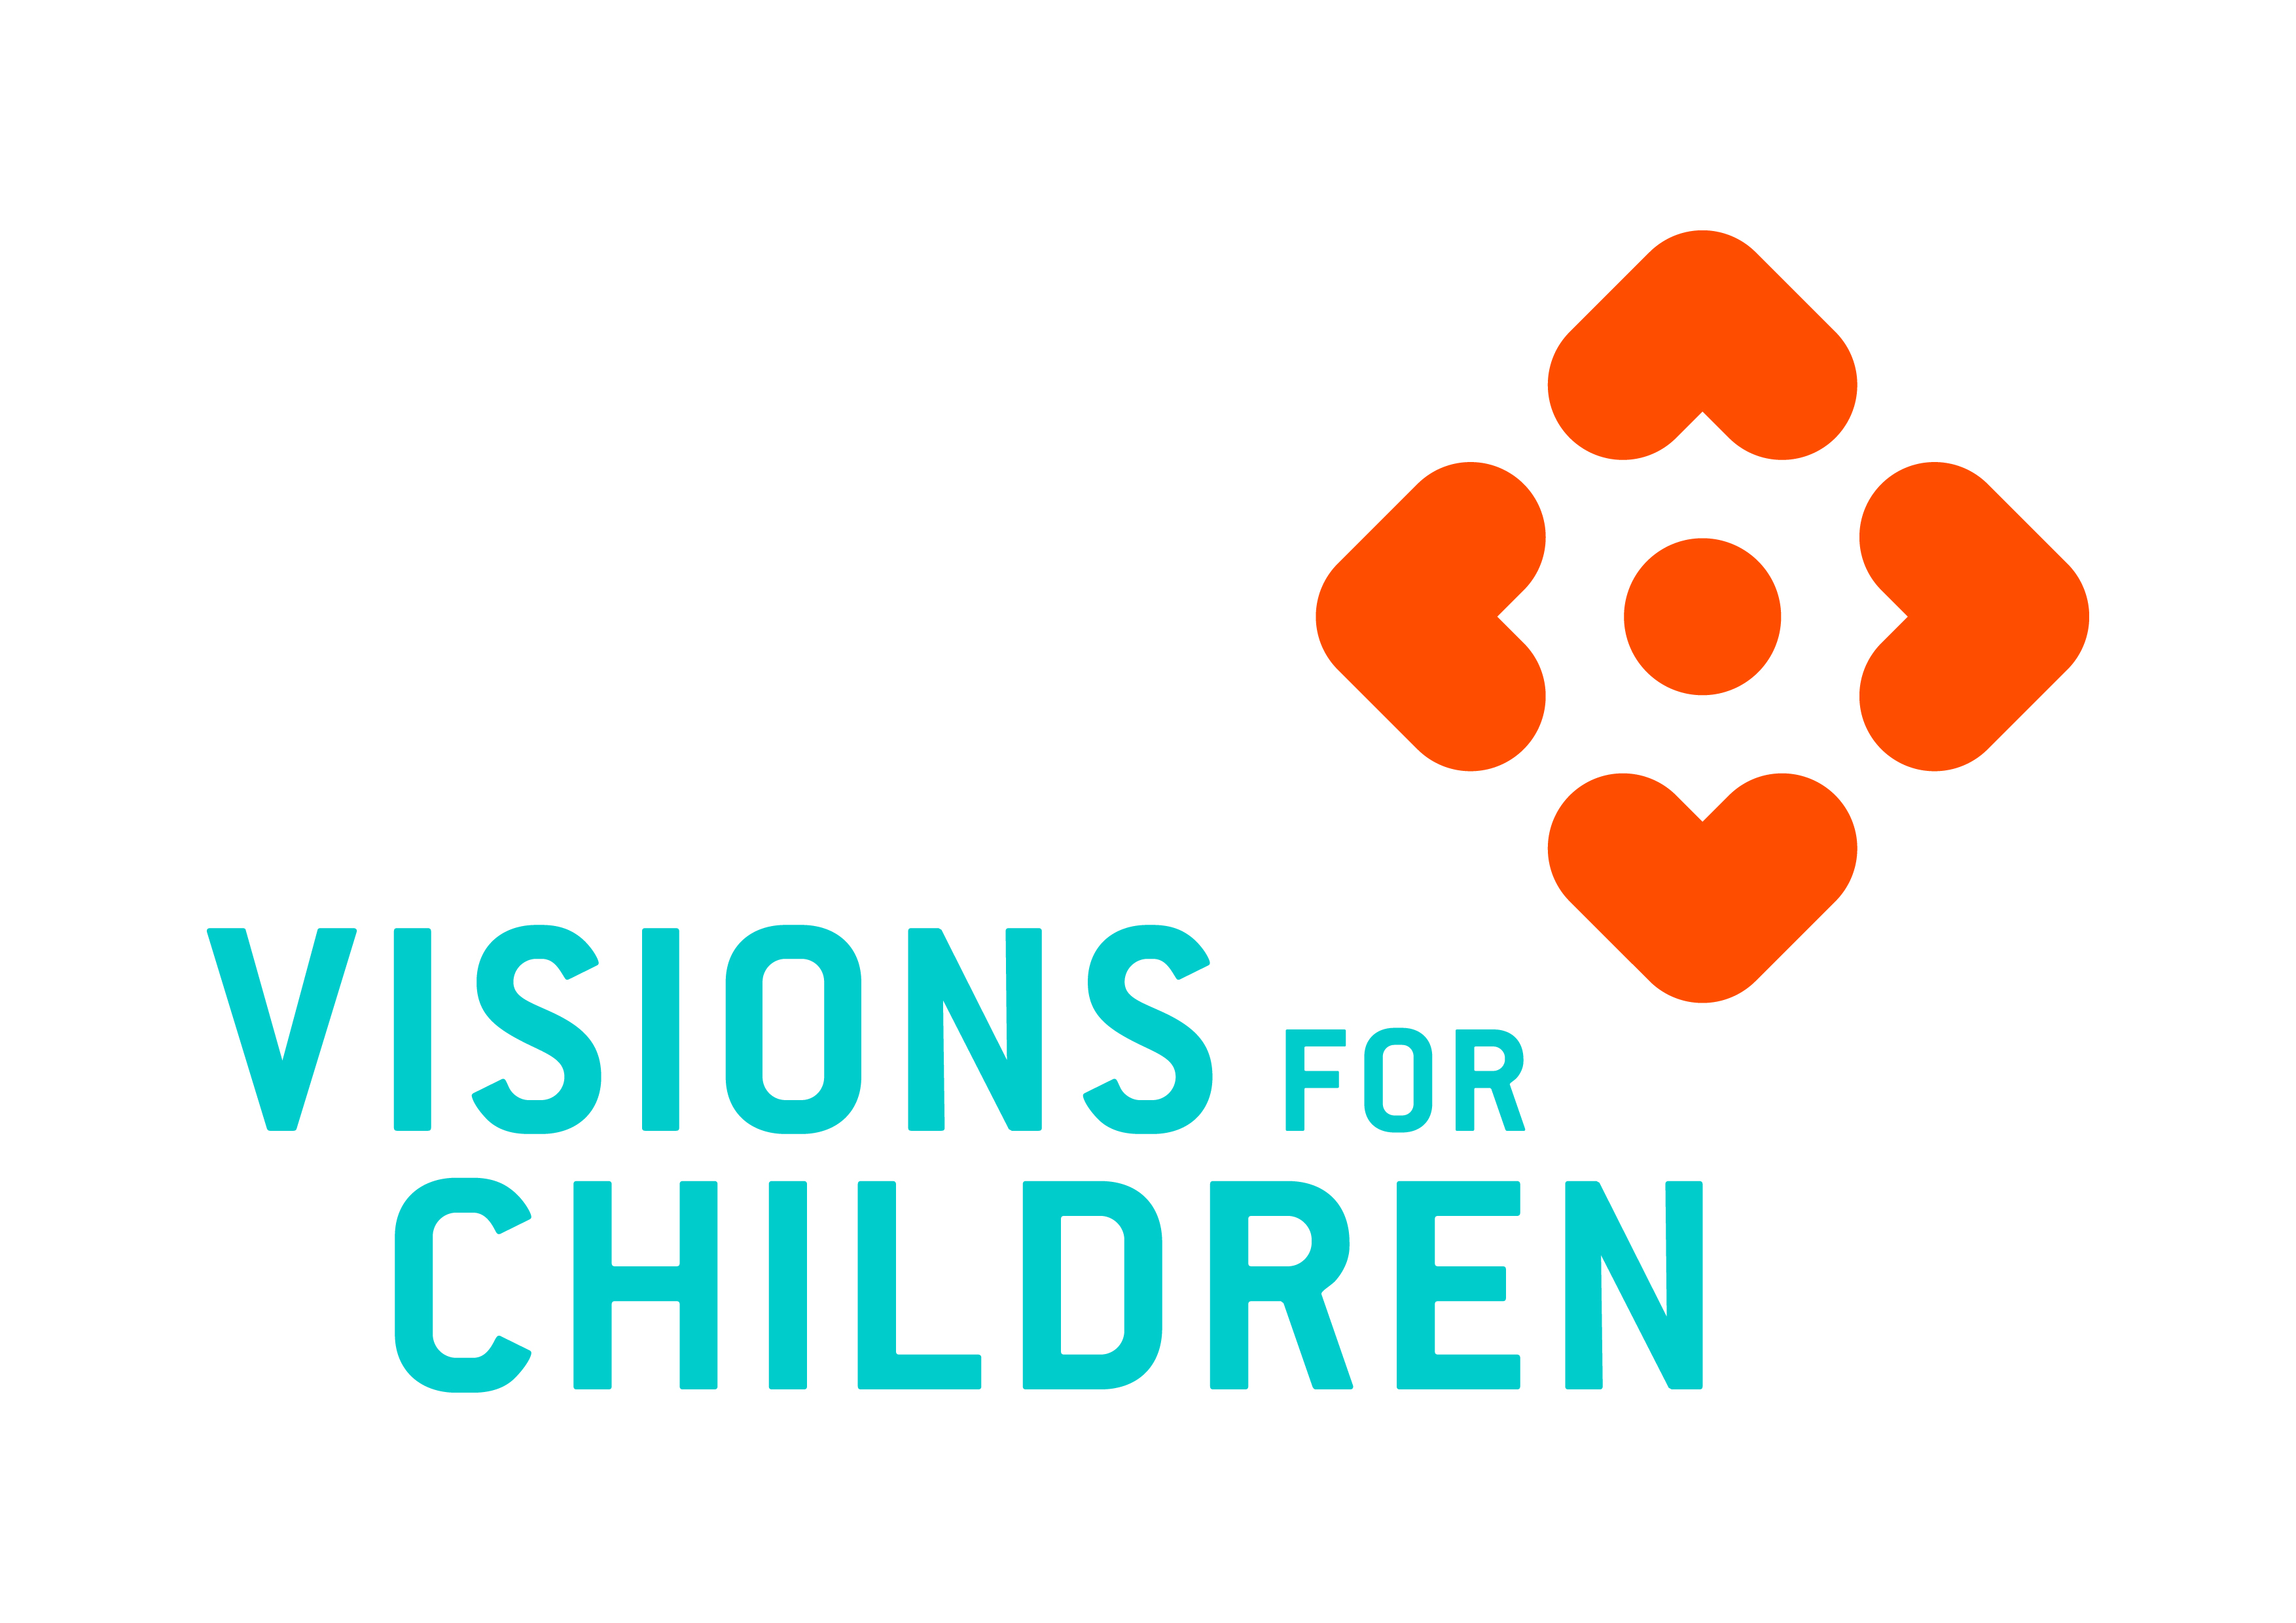 Visions for Children